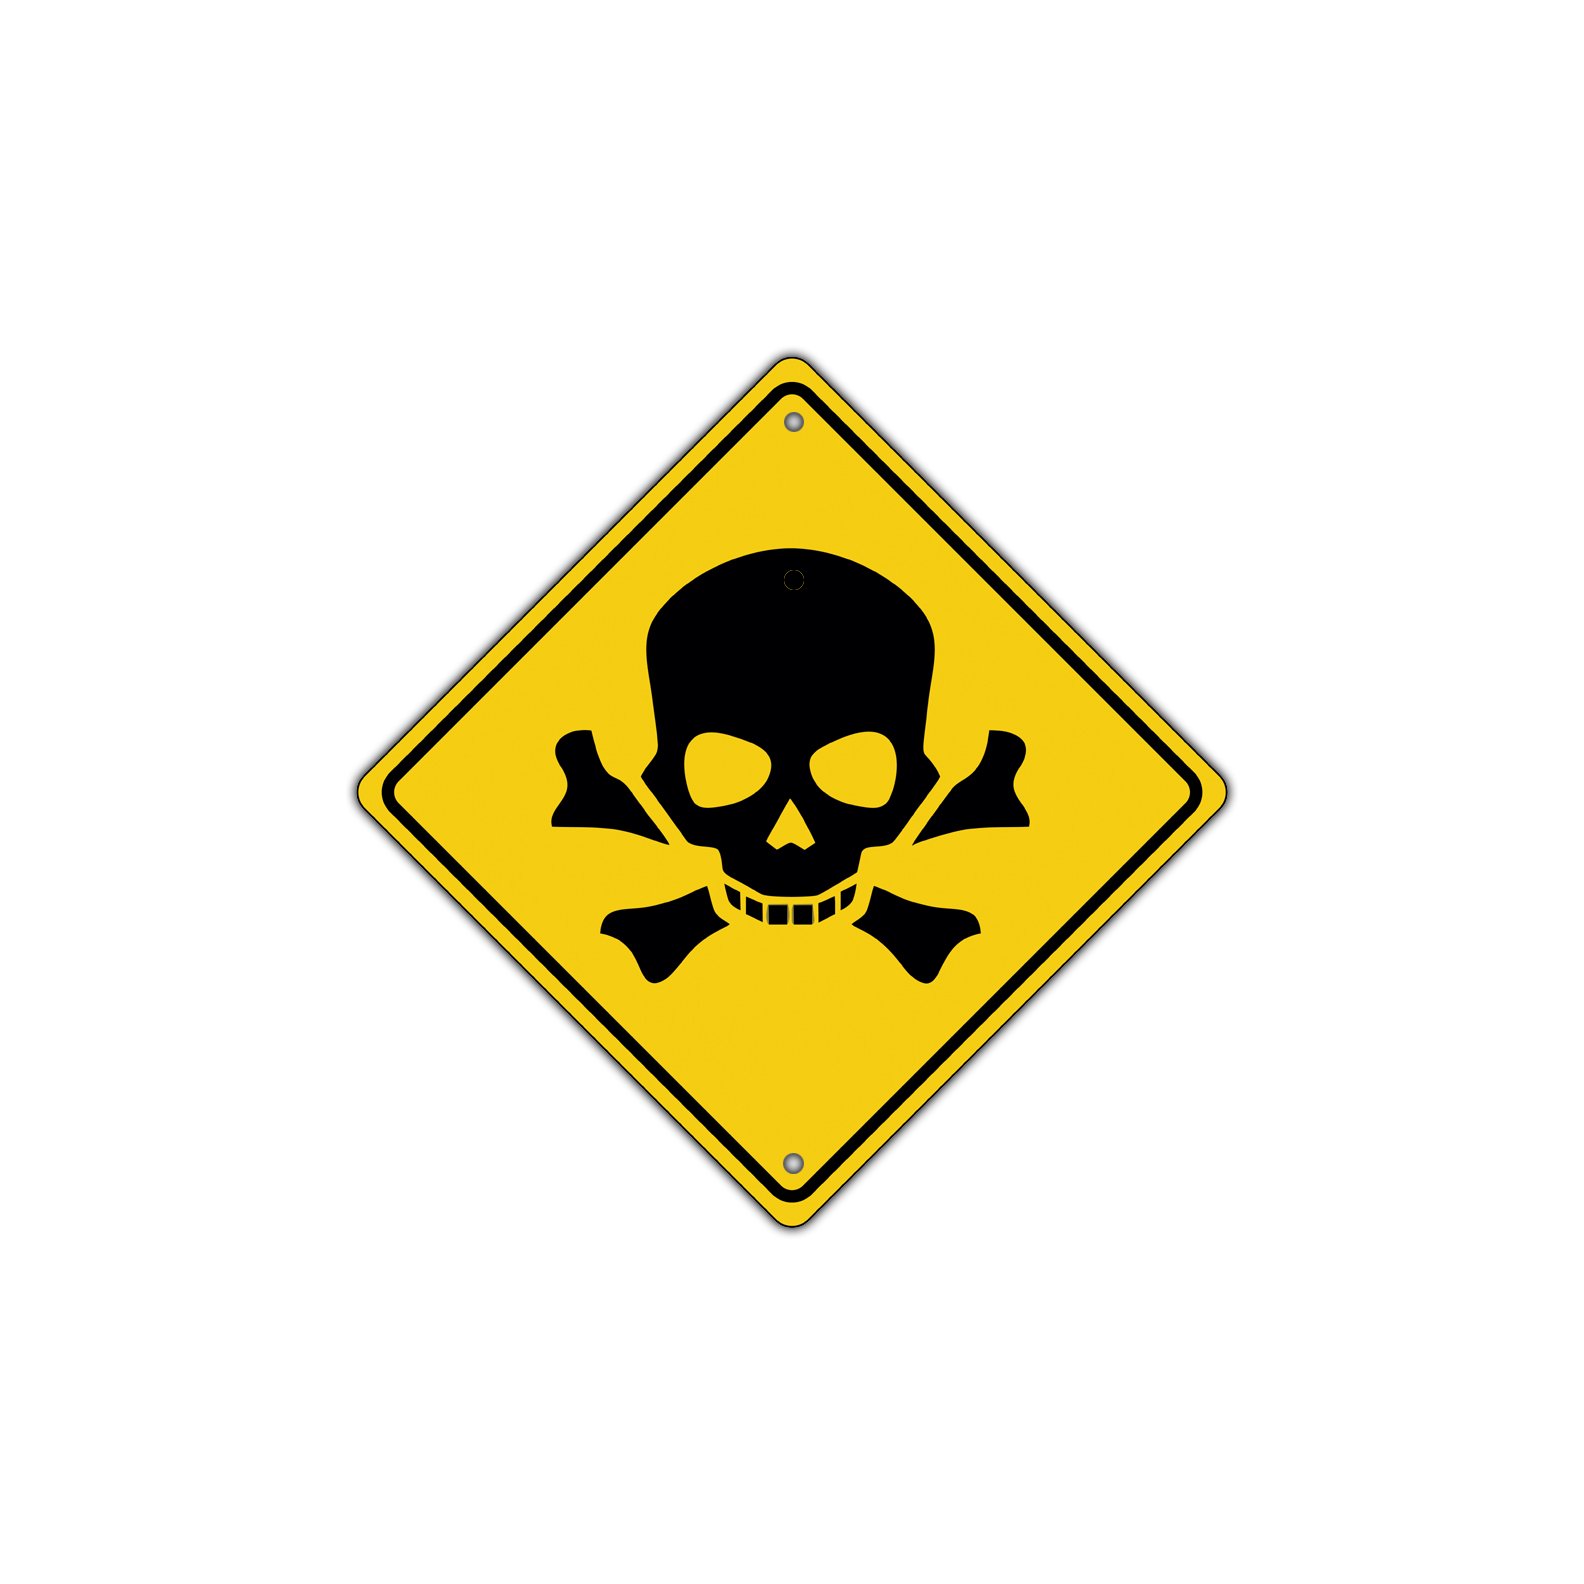 Toxic waste symbol